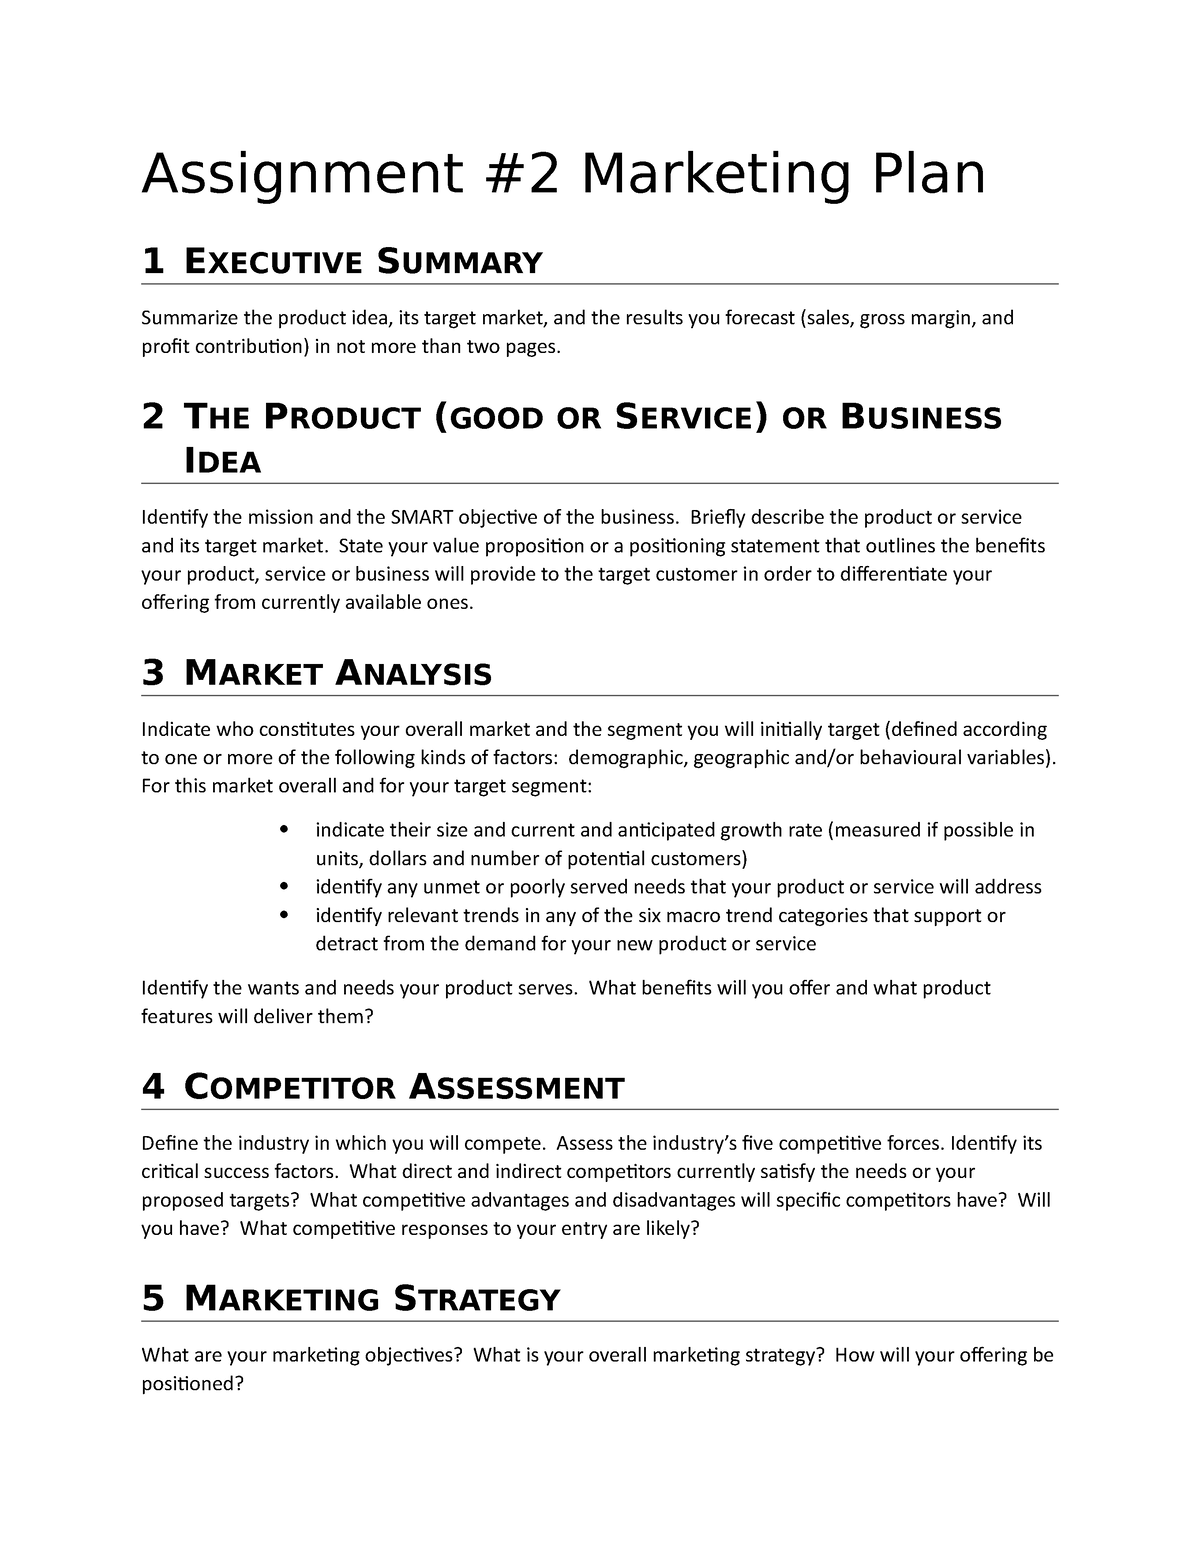 module 2 week 2 marketing plan company analysis assignment